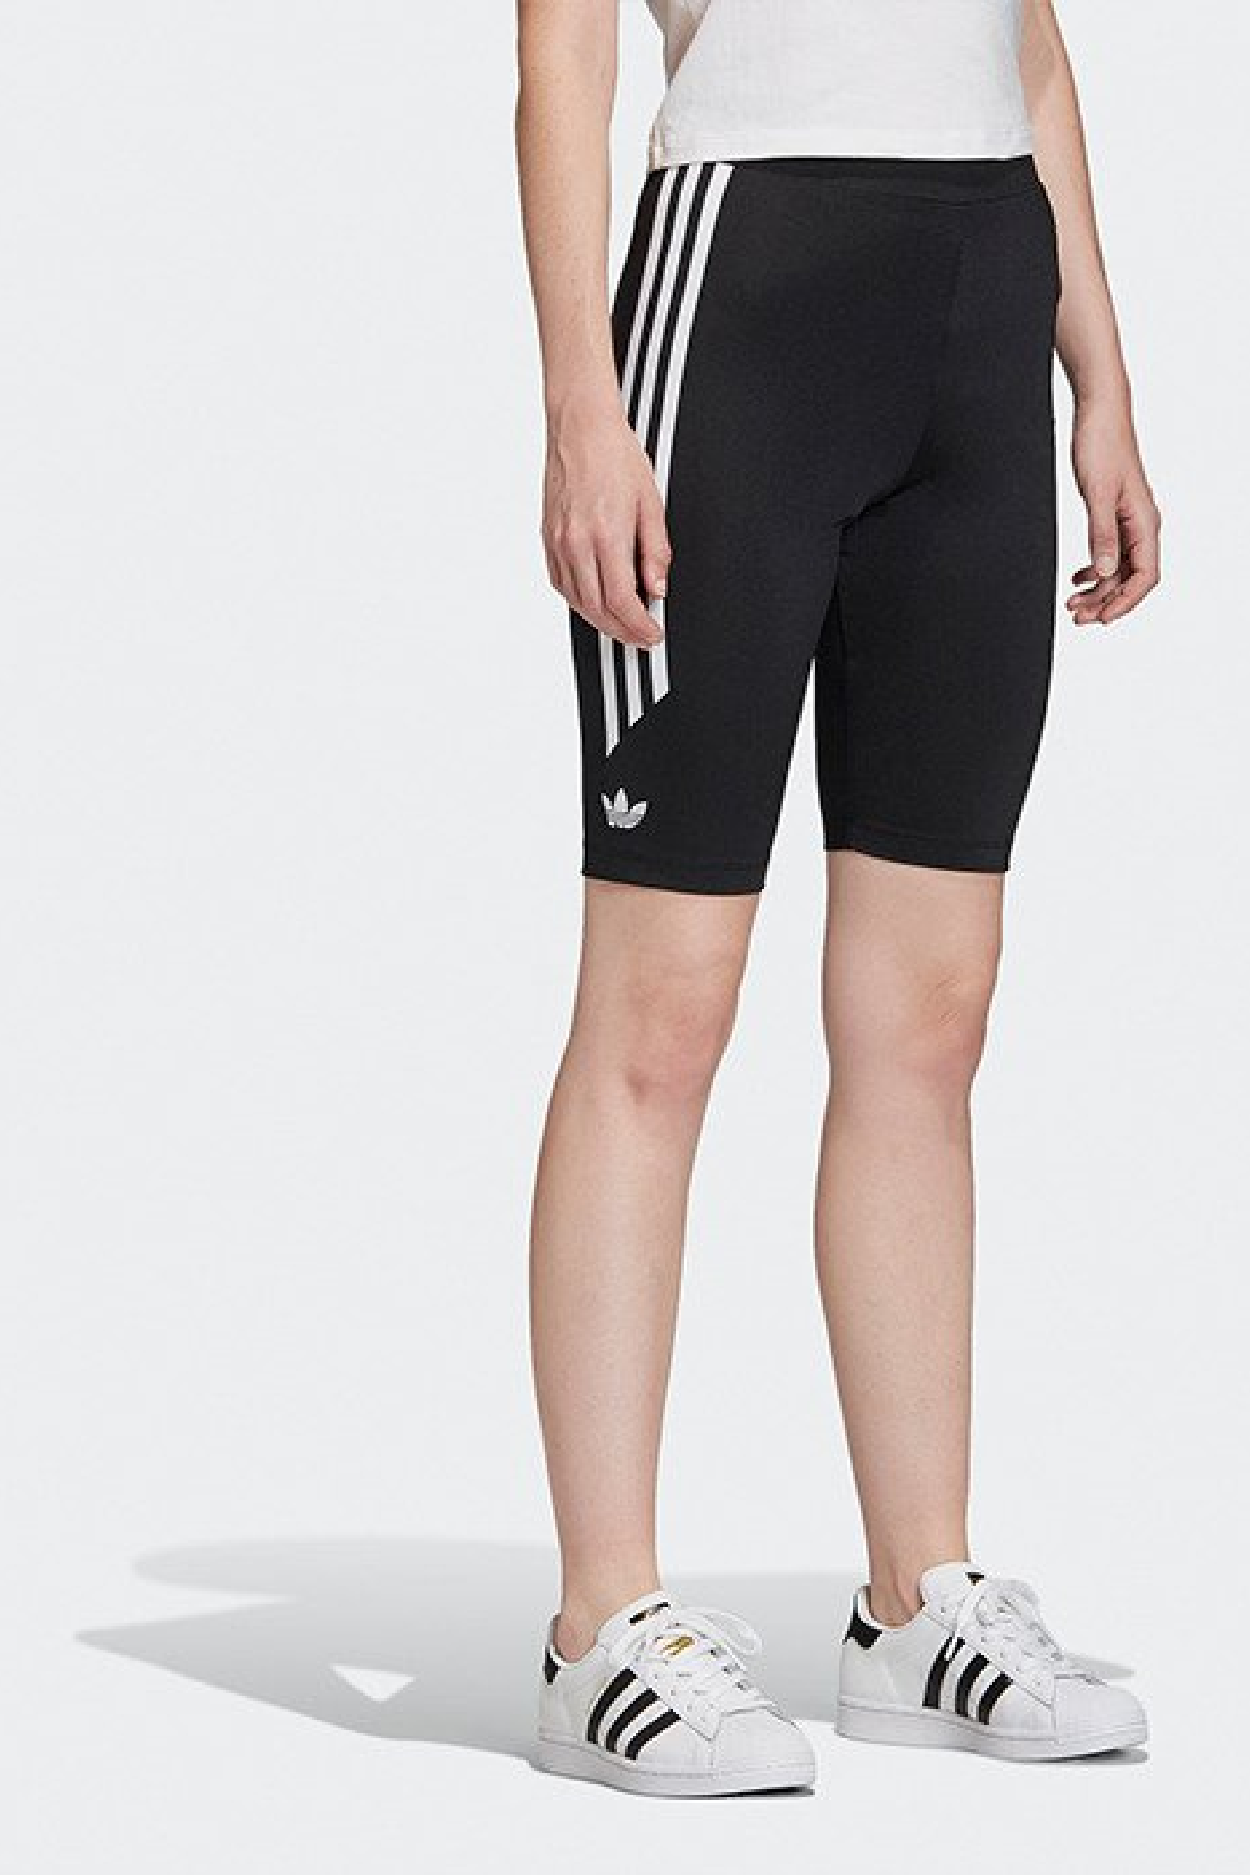 Adidas Originals women trefoil bike Shorts Black